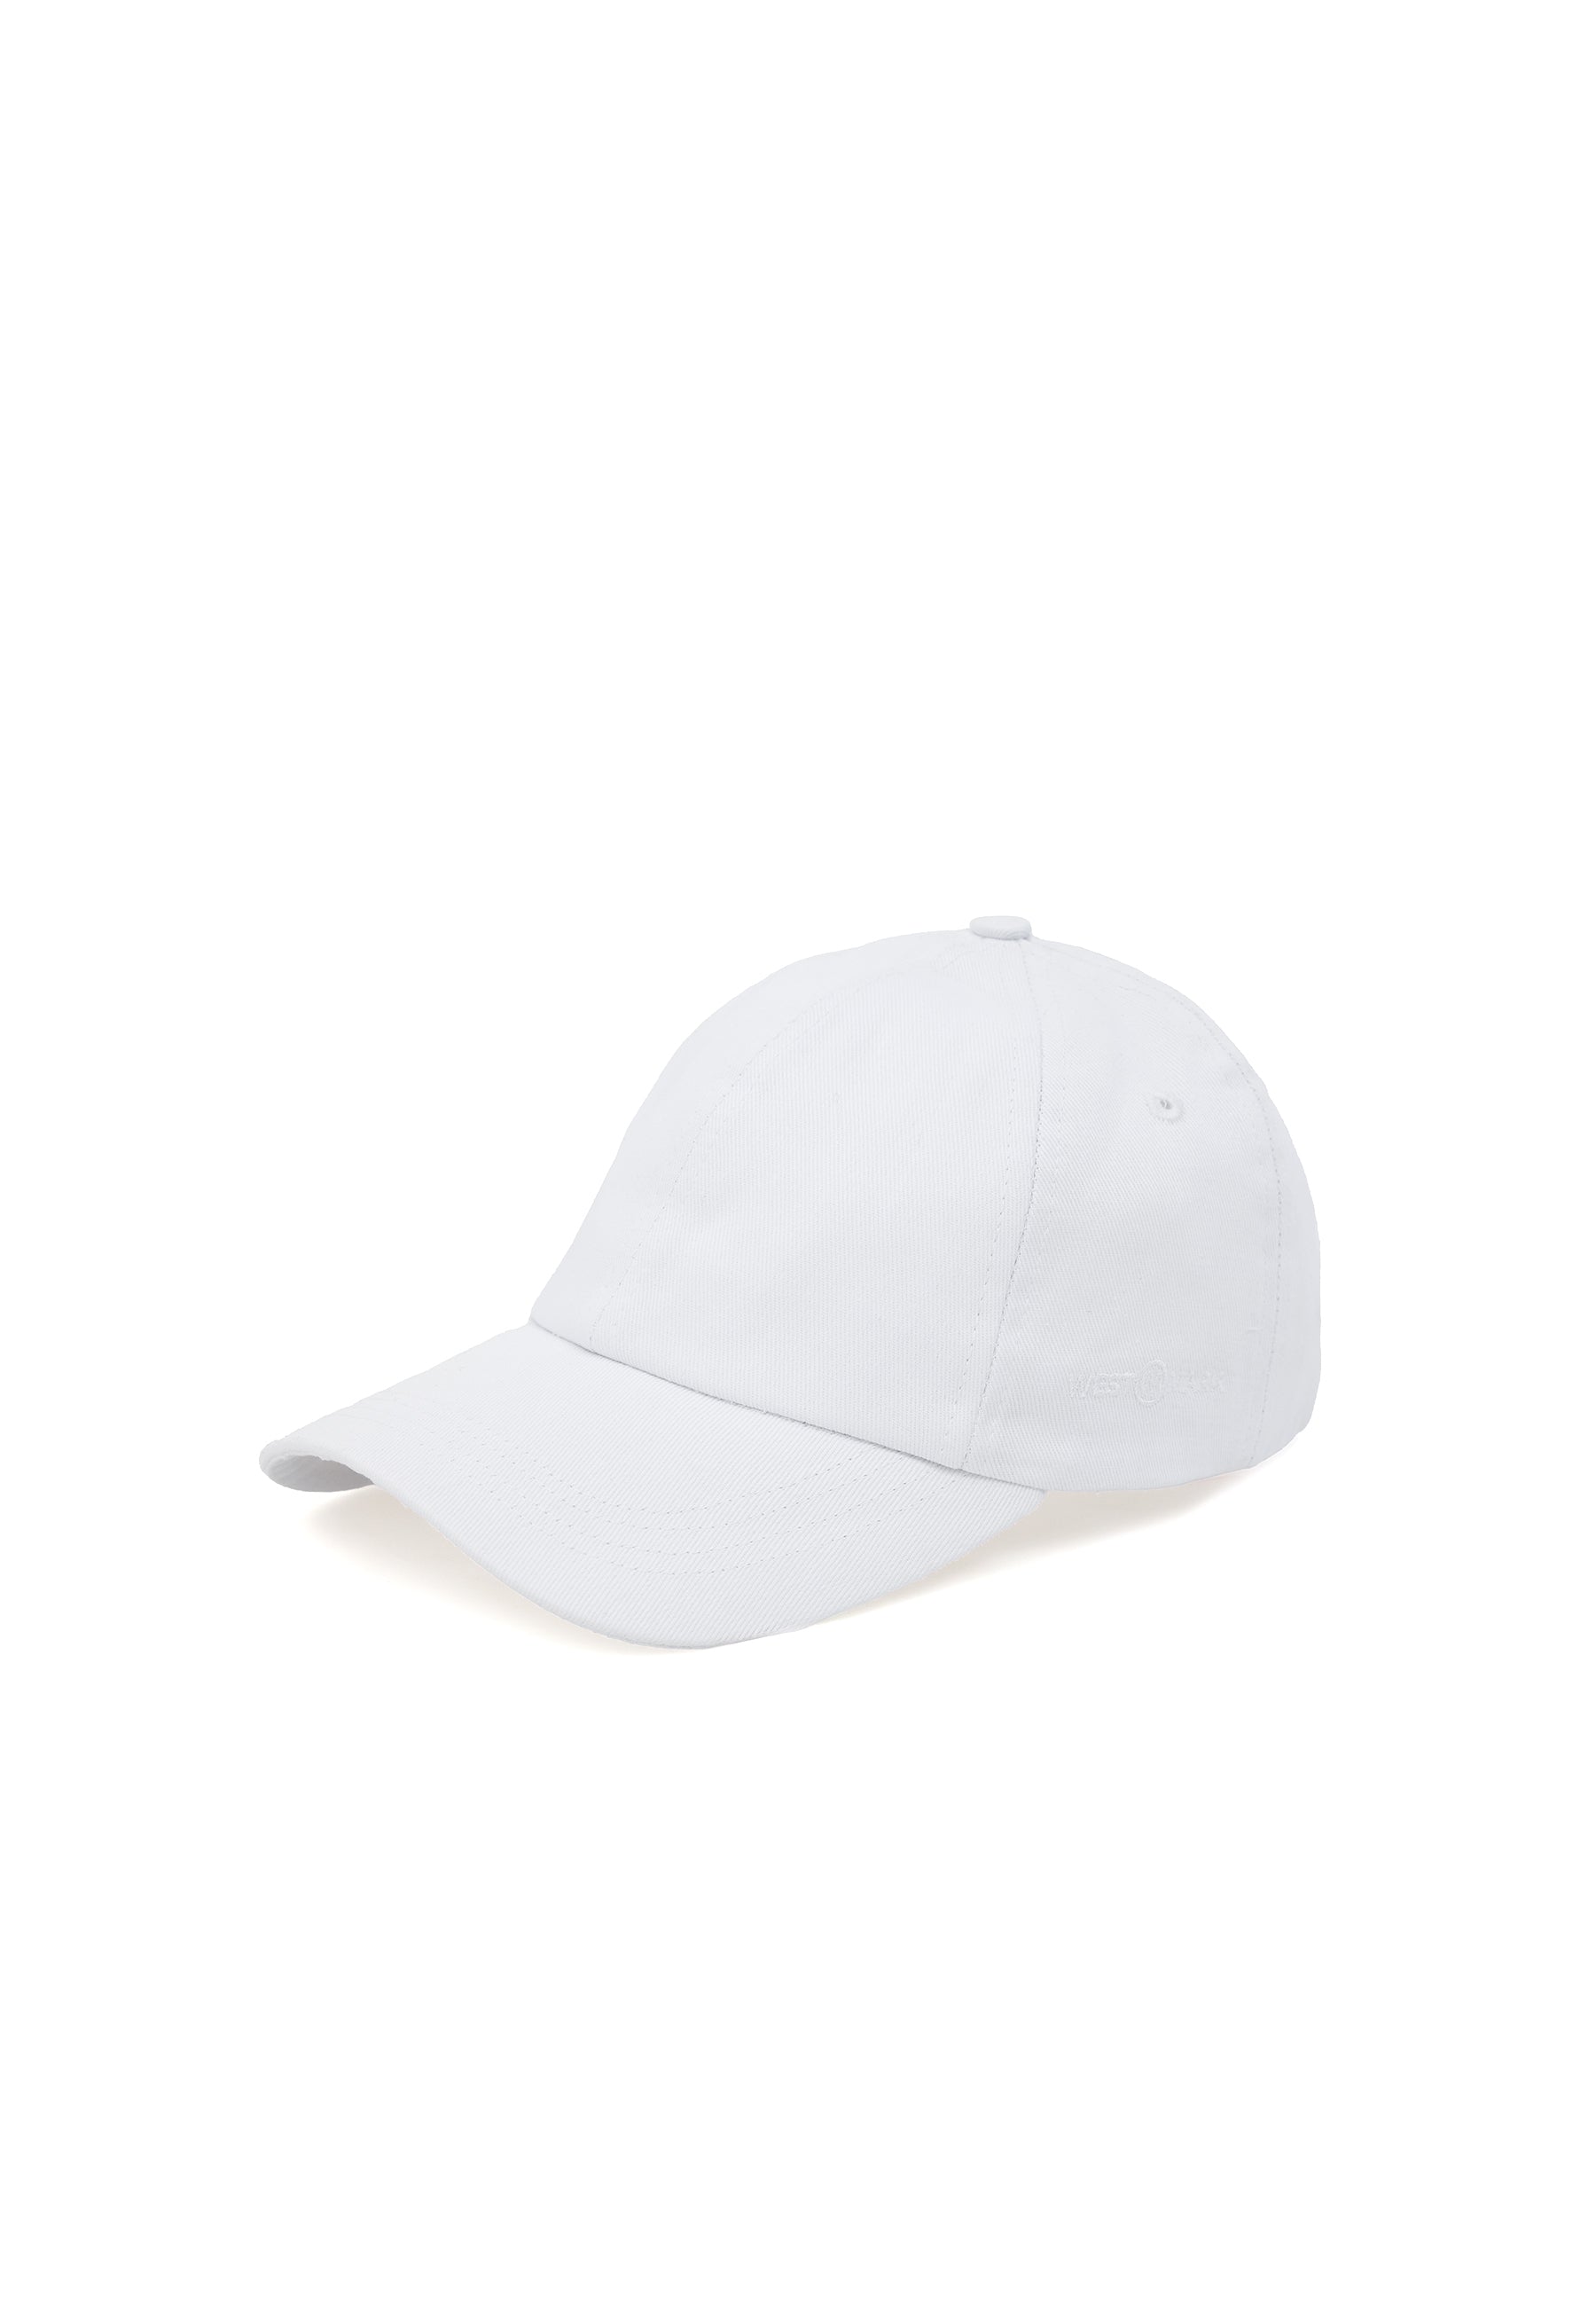 WMCARTER CAP in White